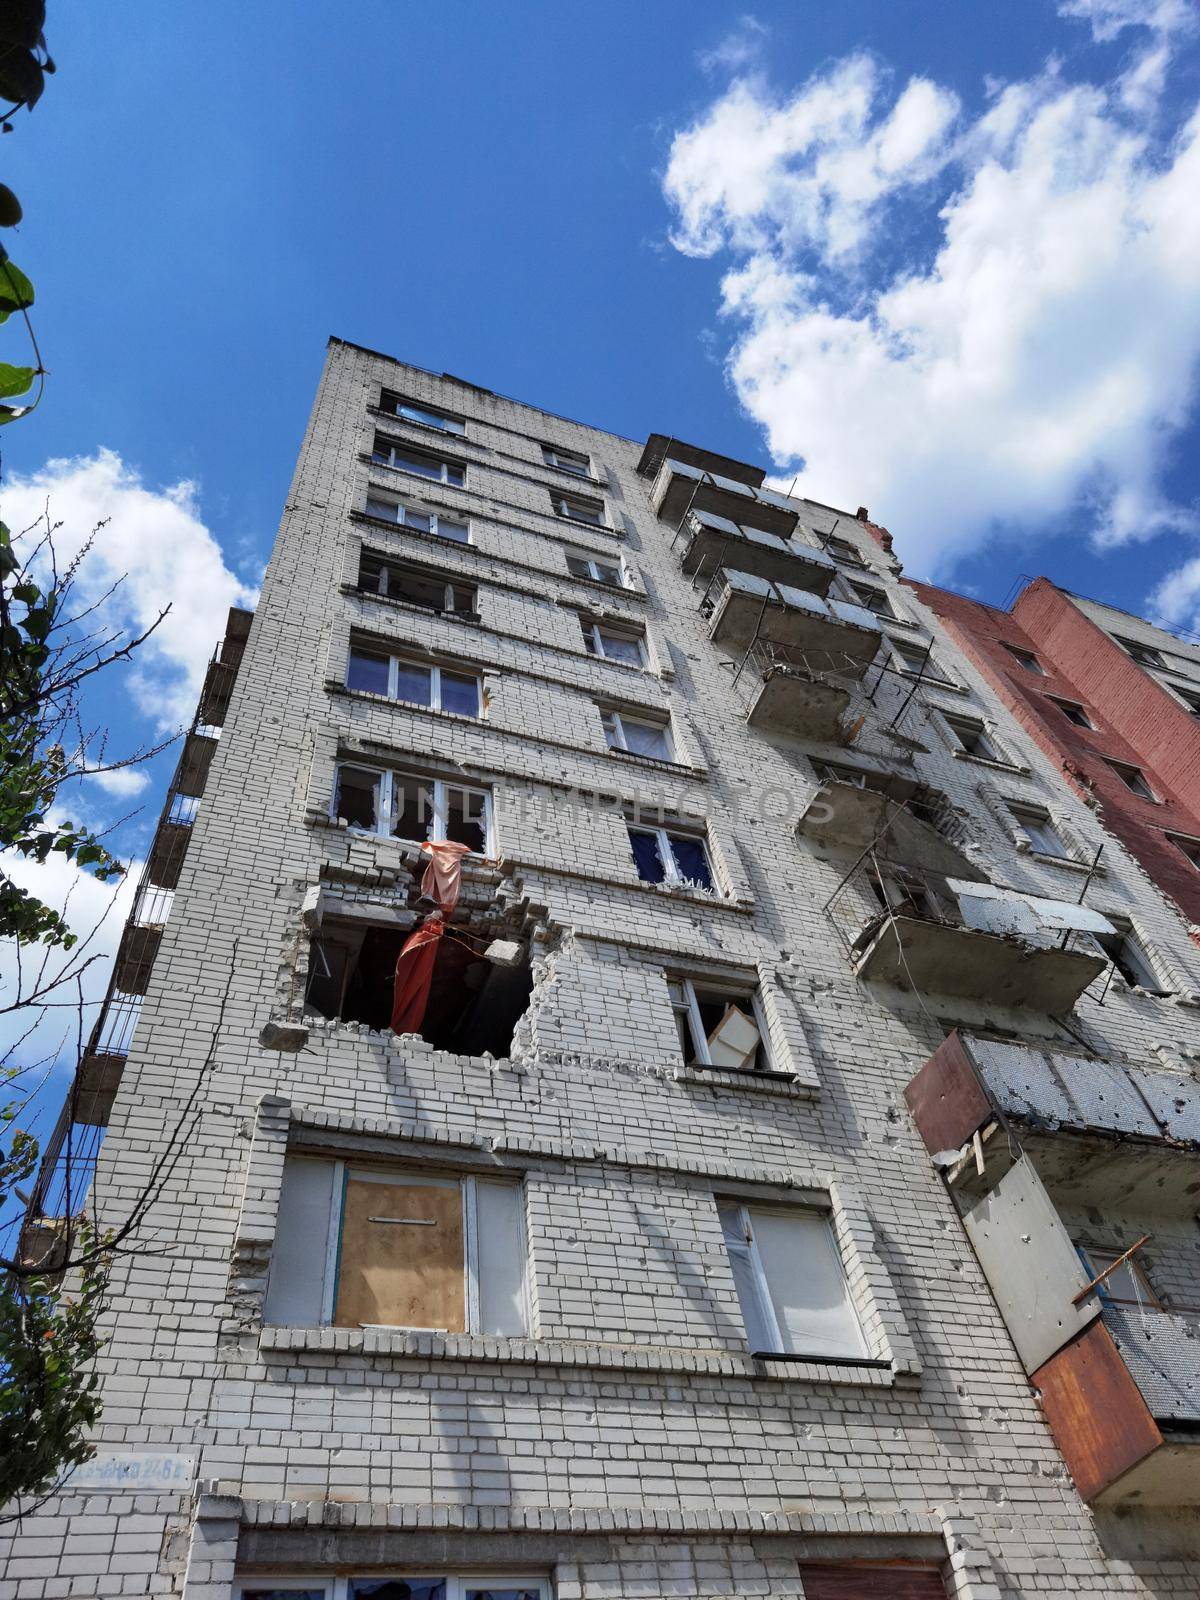 Damaged ruined multi-storey house in Chernihiv near Kyiv on north of Ukraine by sarymsakov